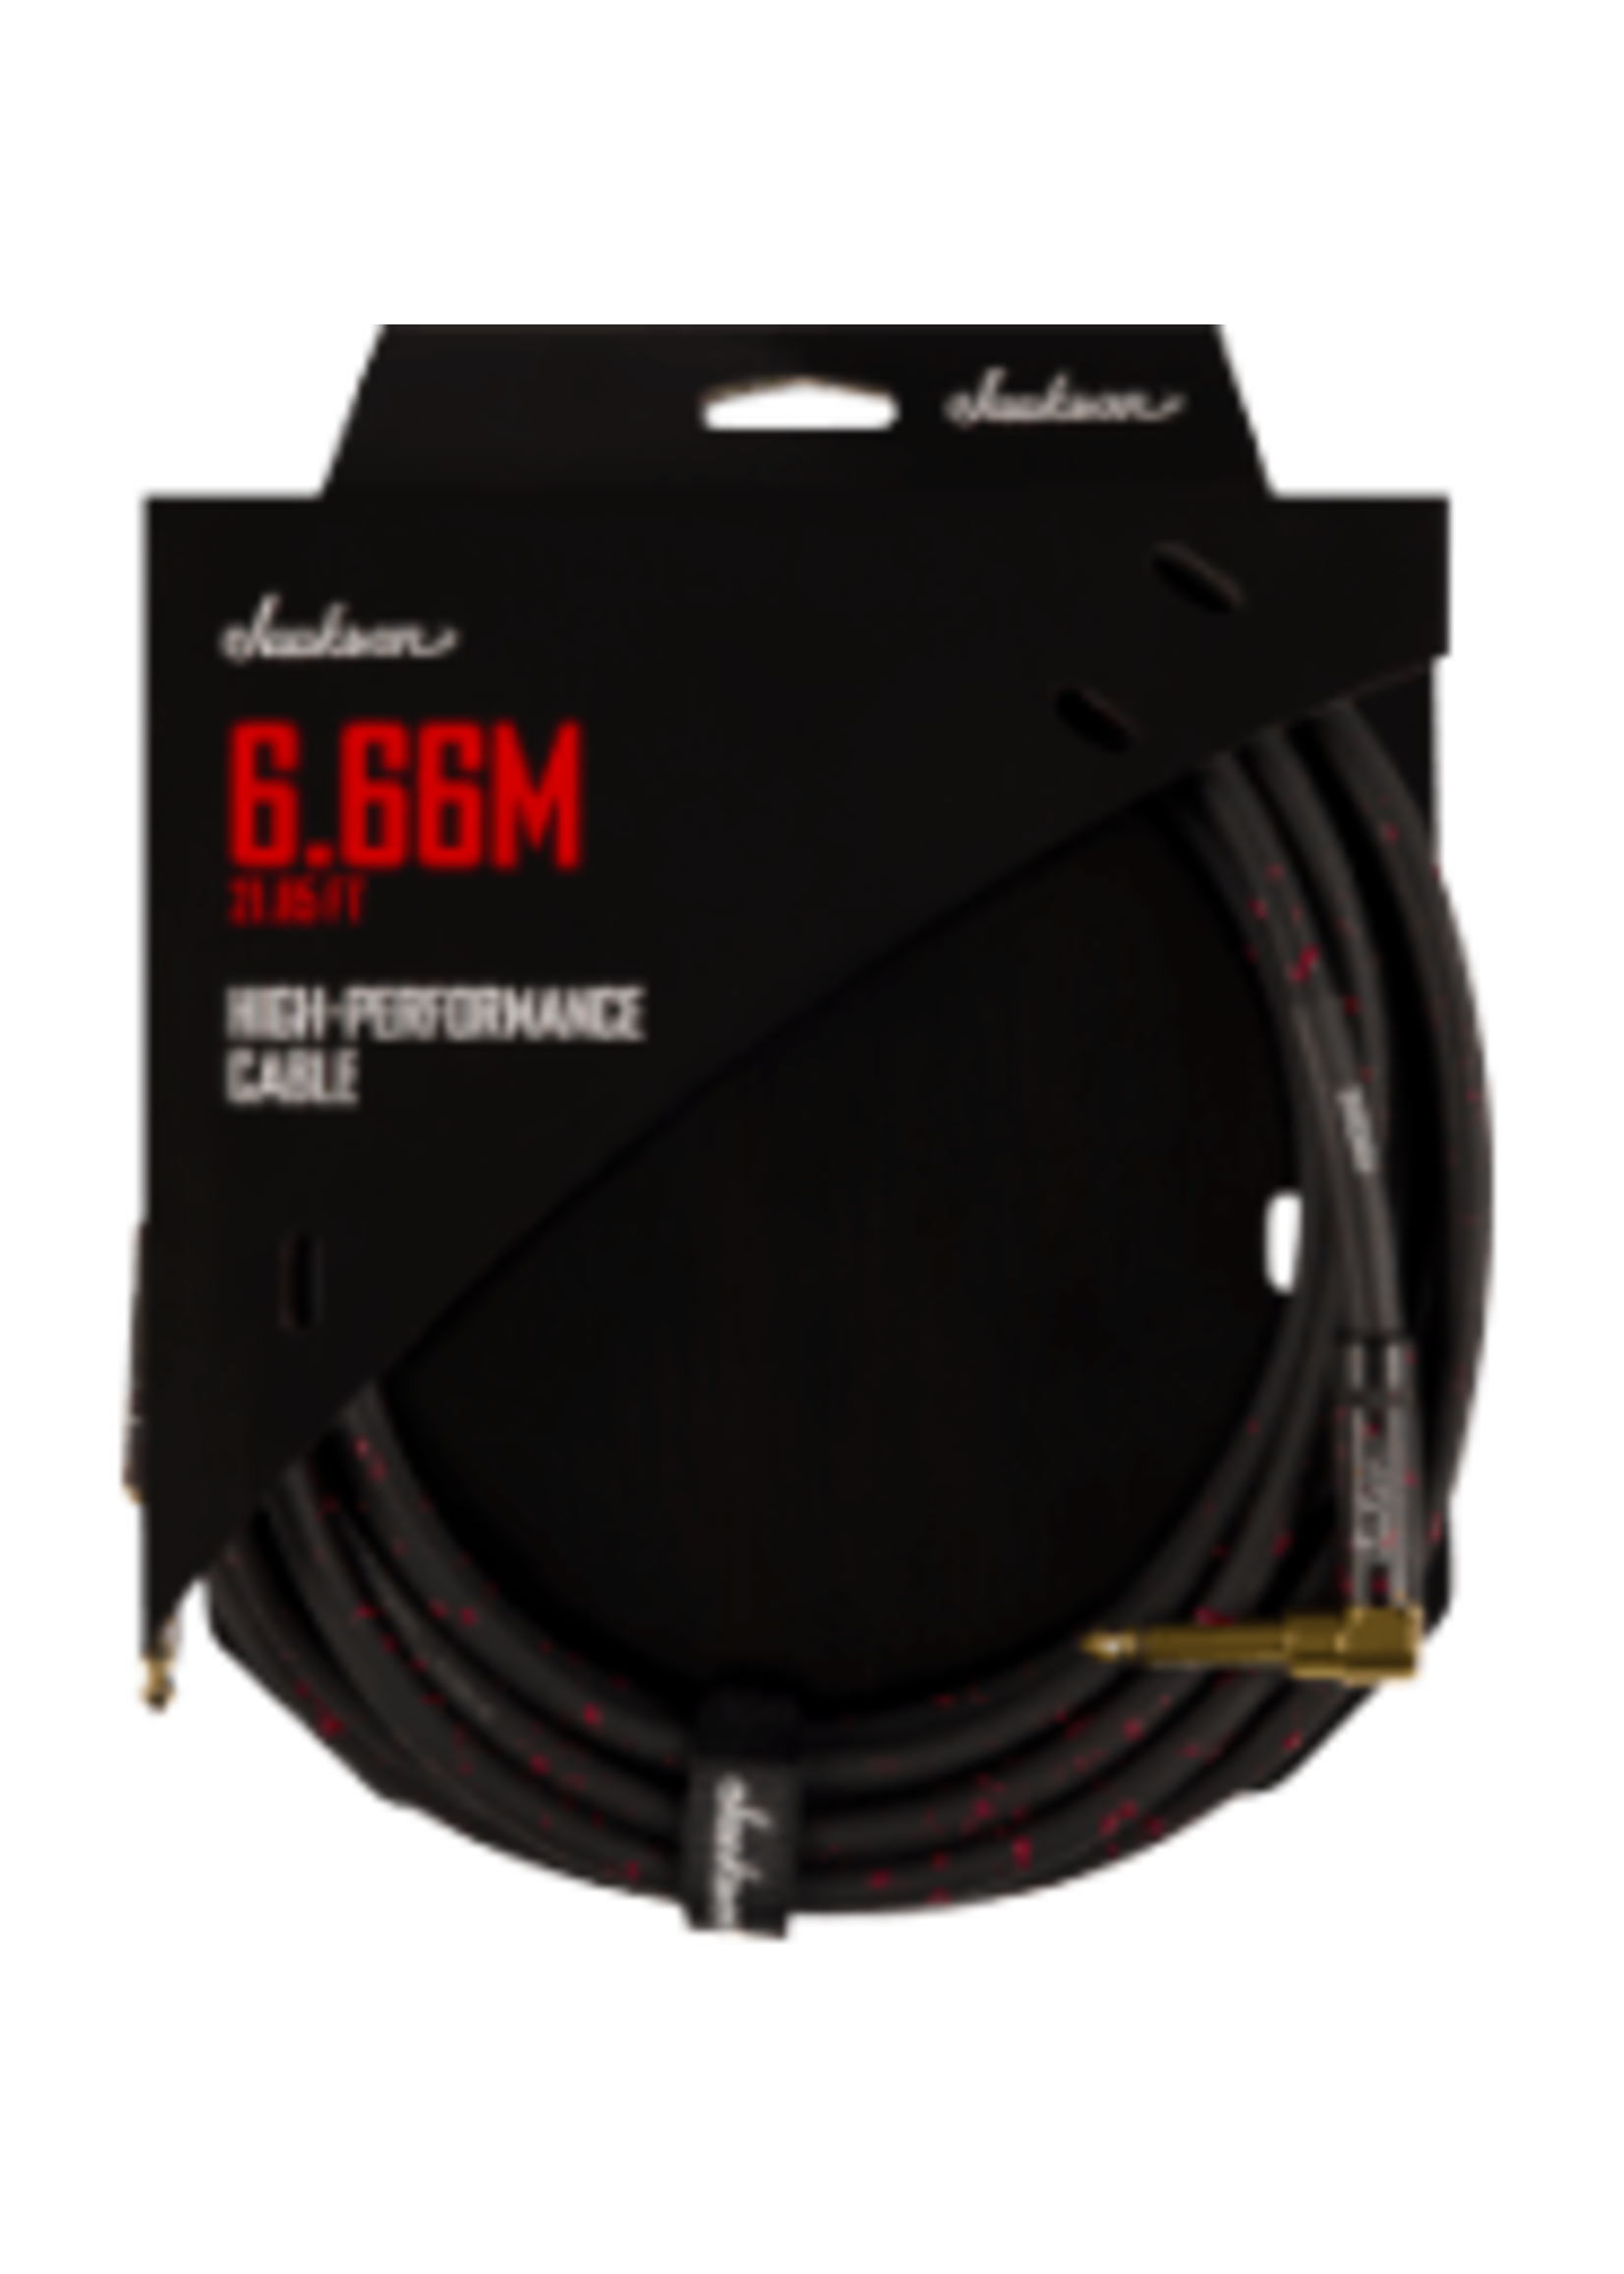 Jackson Jackson 2992185002 21.85 ft High Performance Instrument Cable Black/Red Splatter